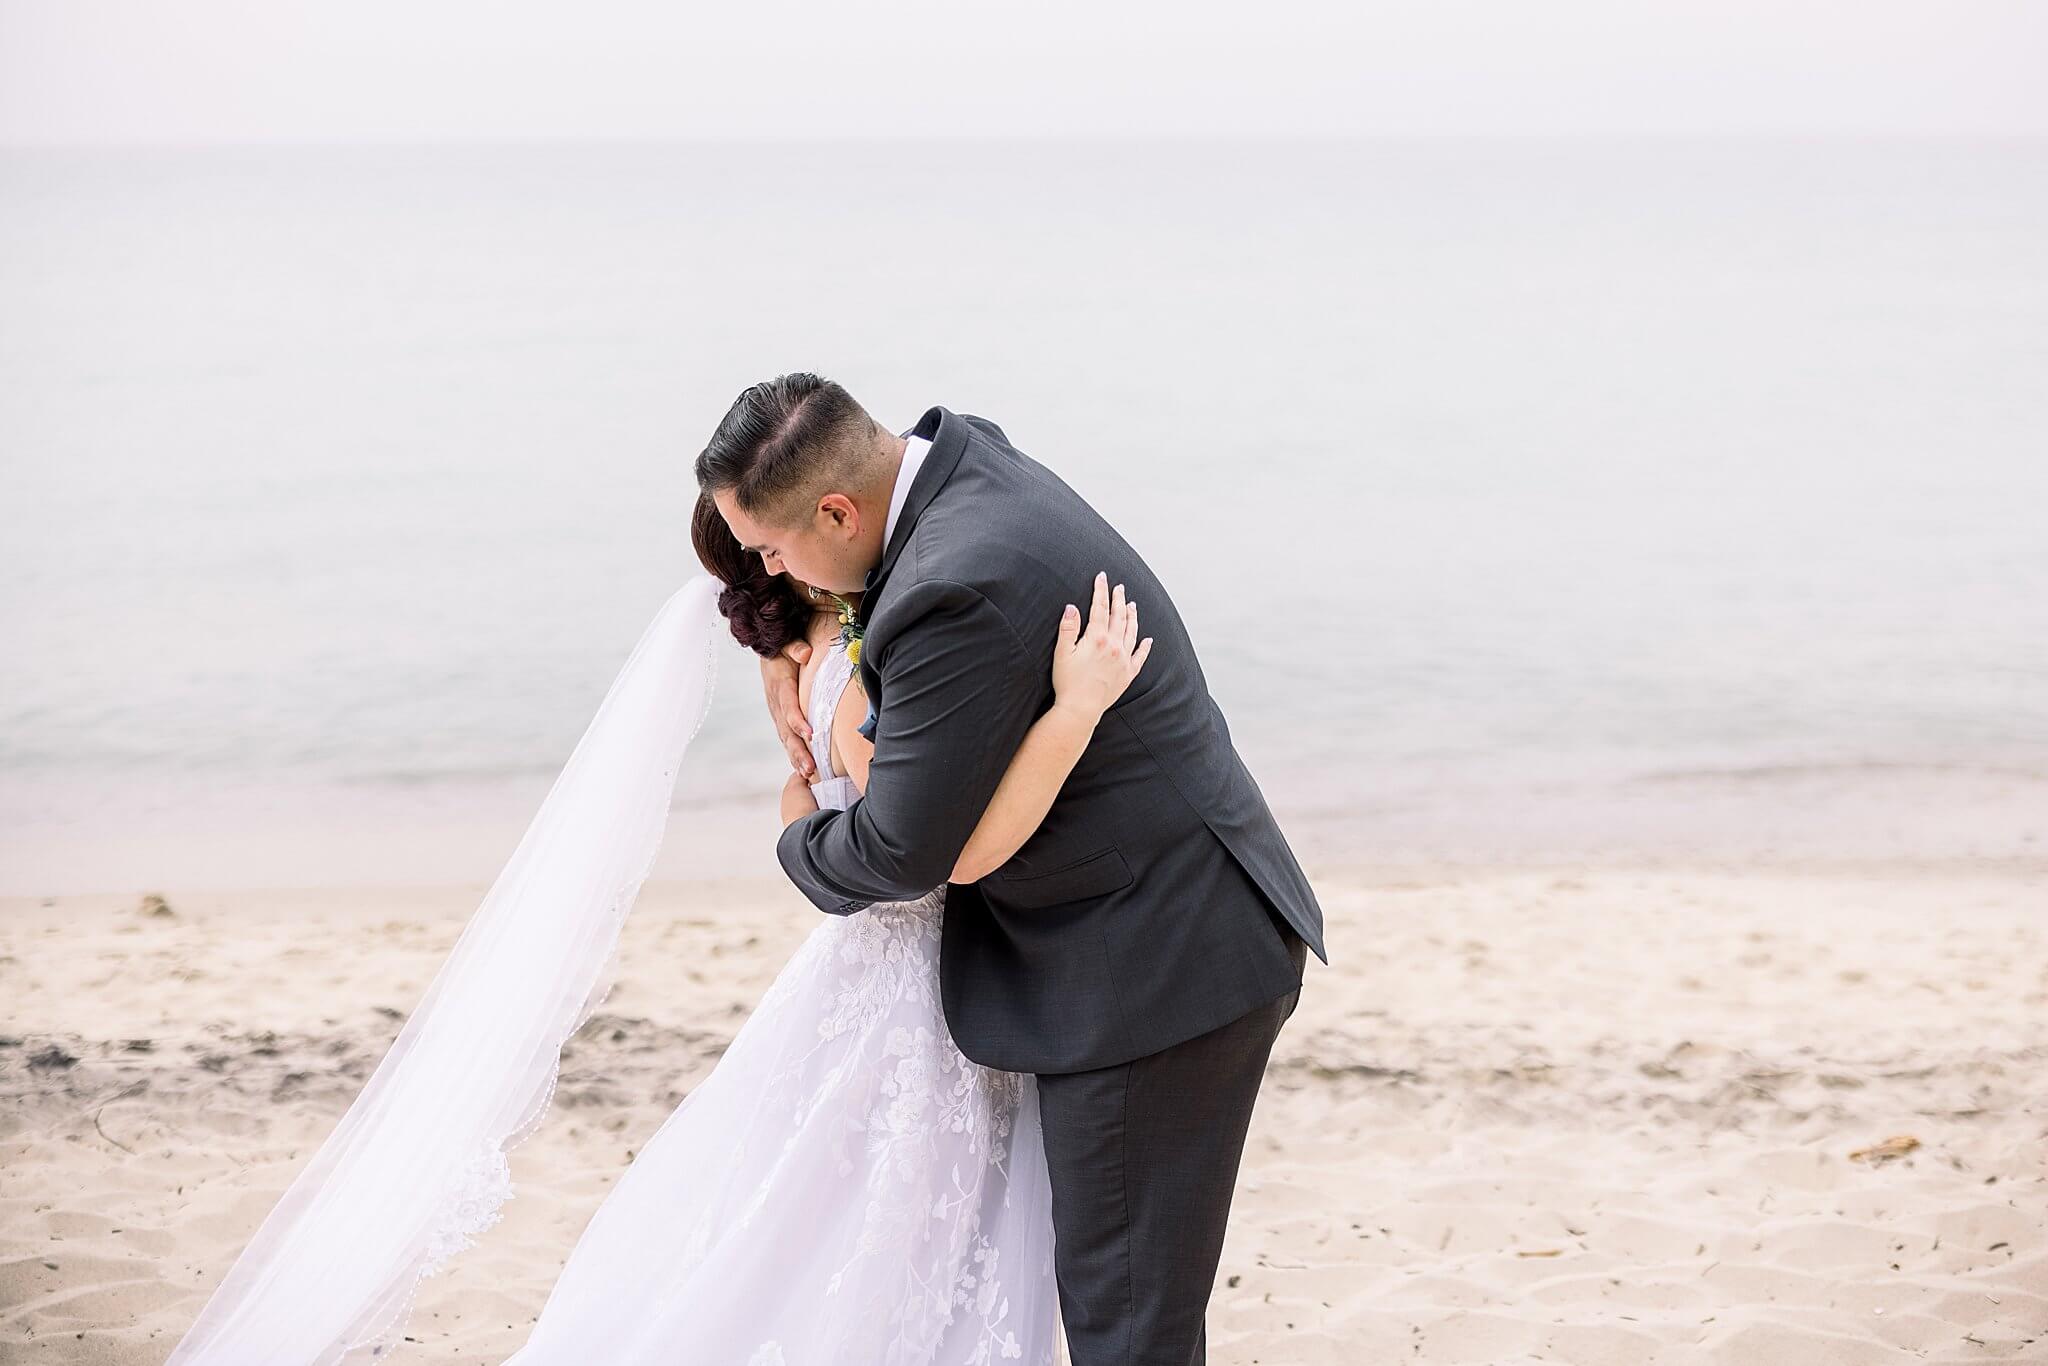 Groom hugs his bride during their first look before Elberta Life Saving Station wedding day.